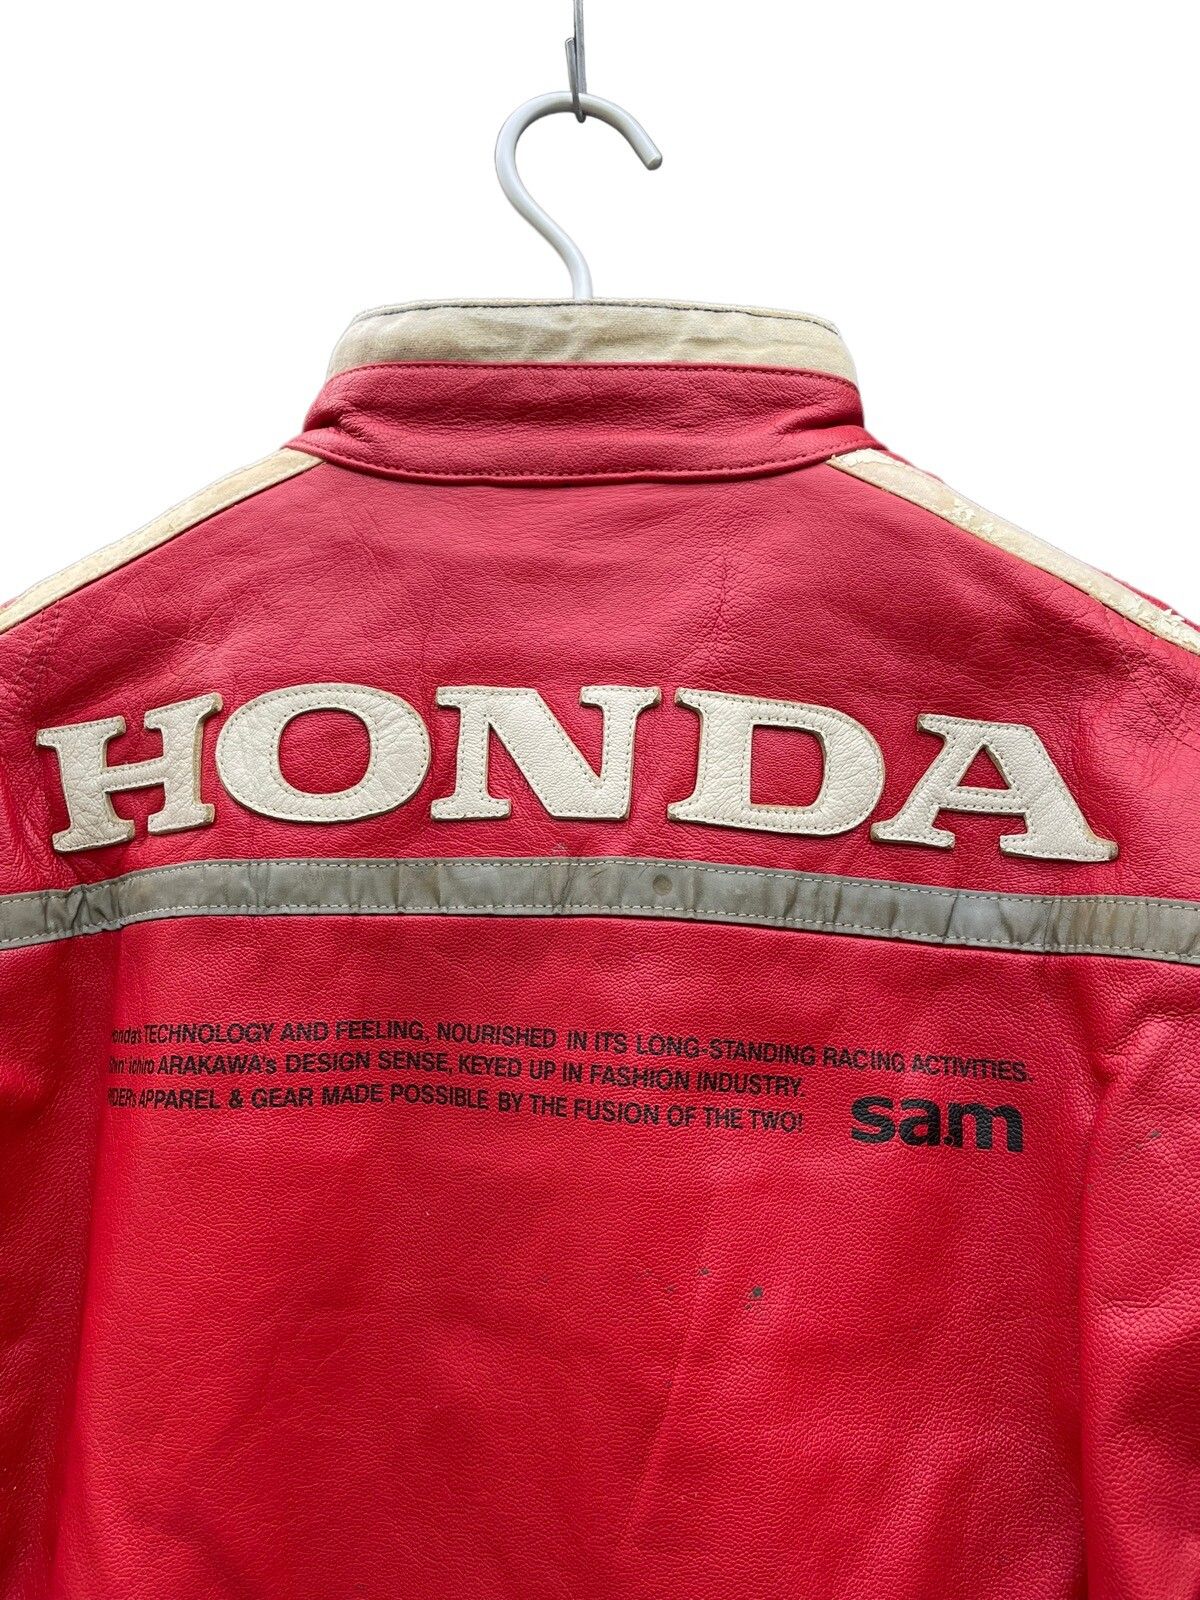 Honda Honda Leather Riding Jacket Size US L / EU 52-54 / 3 - 6 Thumbnail